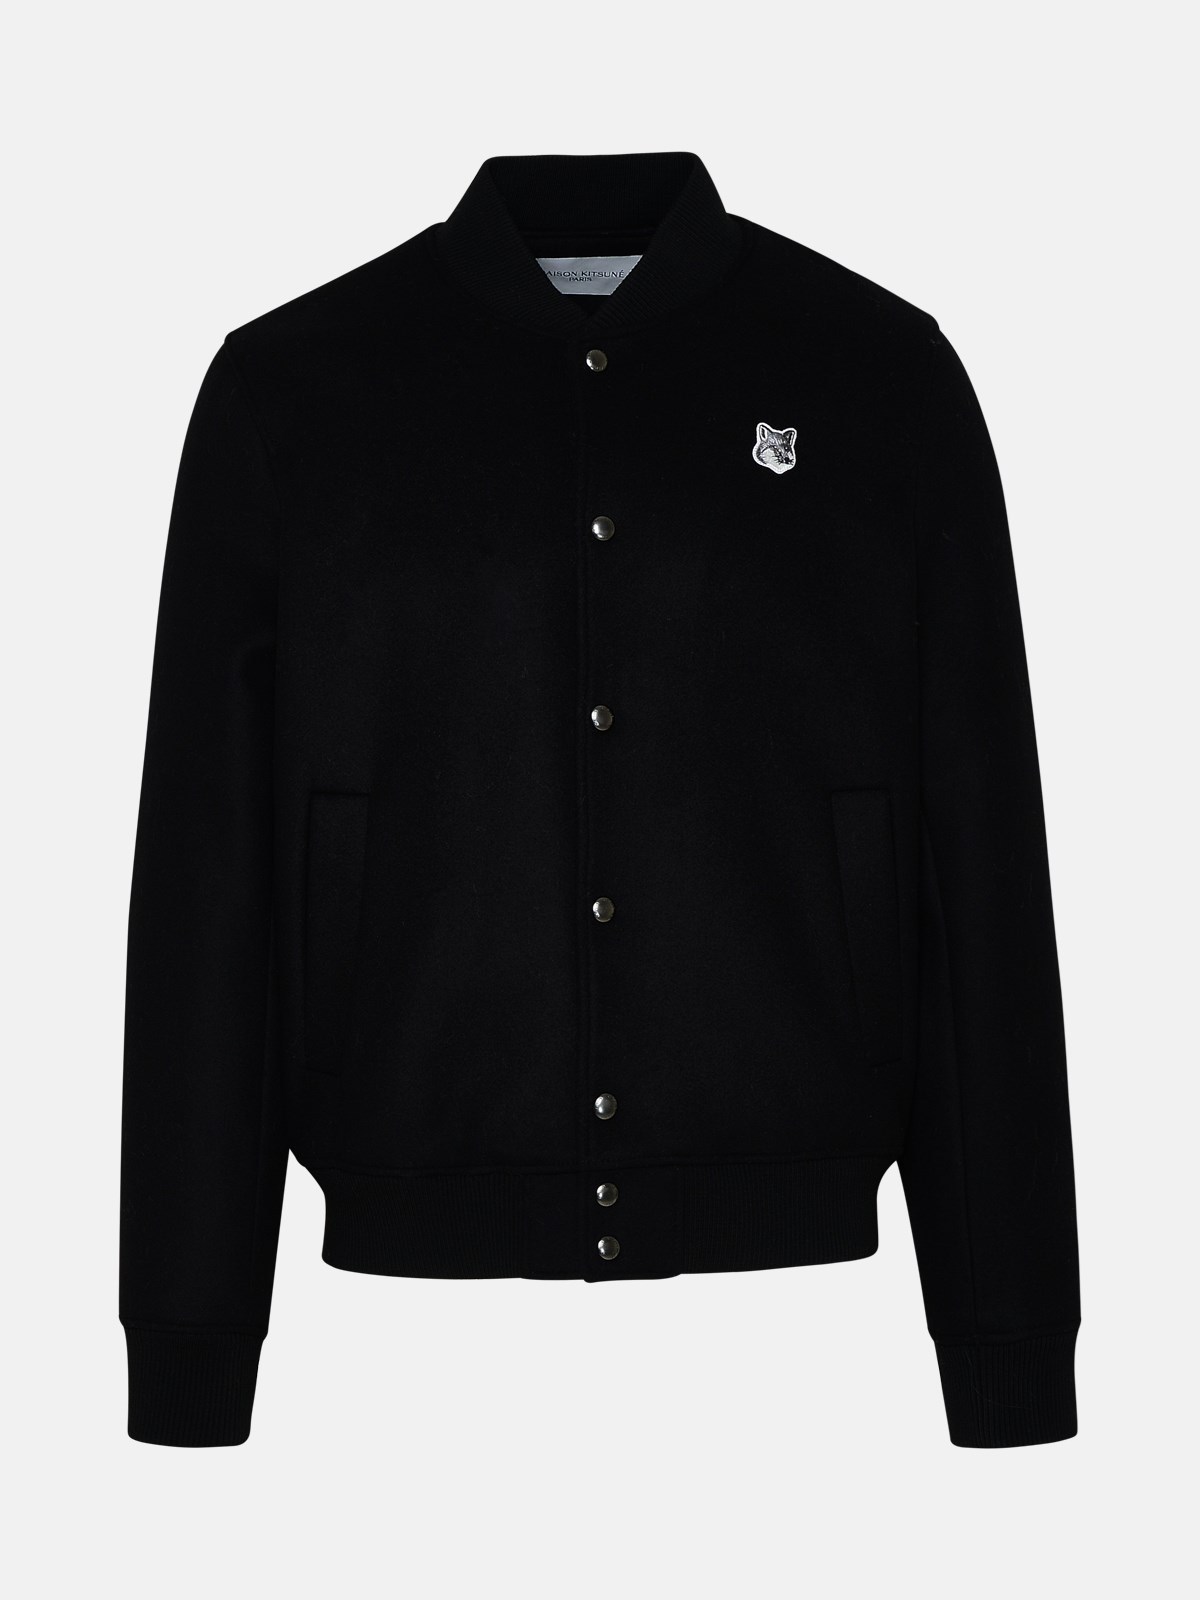 Maison Kitsuné Black Wool Blend Teddy Bomber Jacket